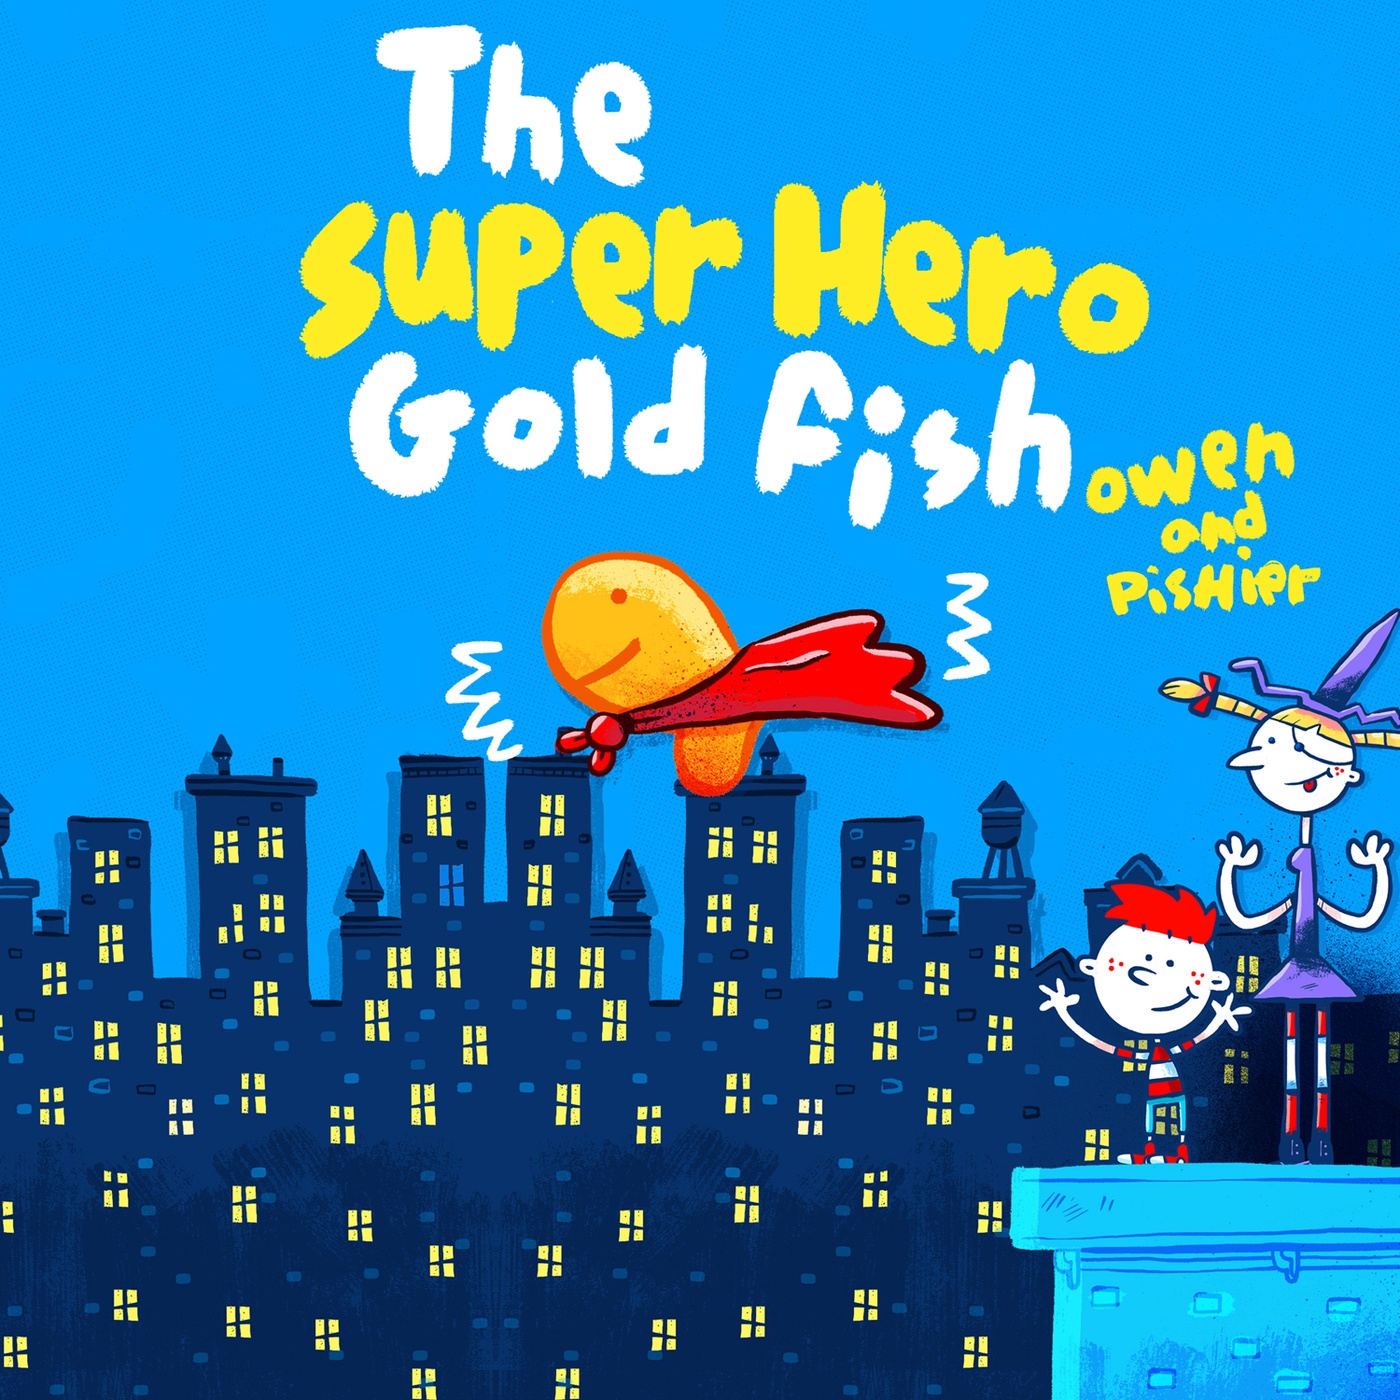 PisHier - Page1:The Super hero goldfish